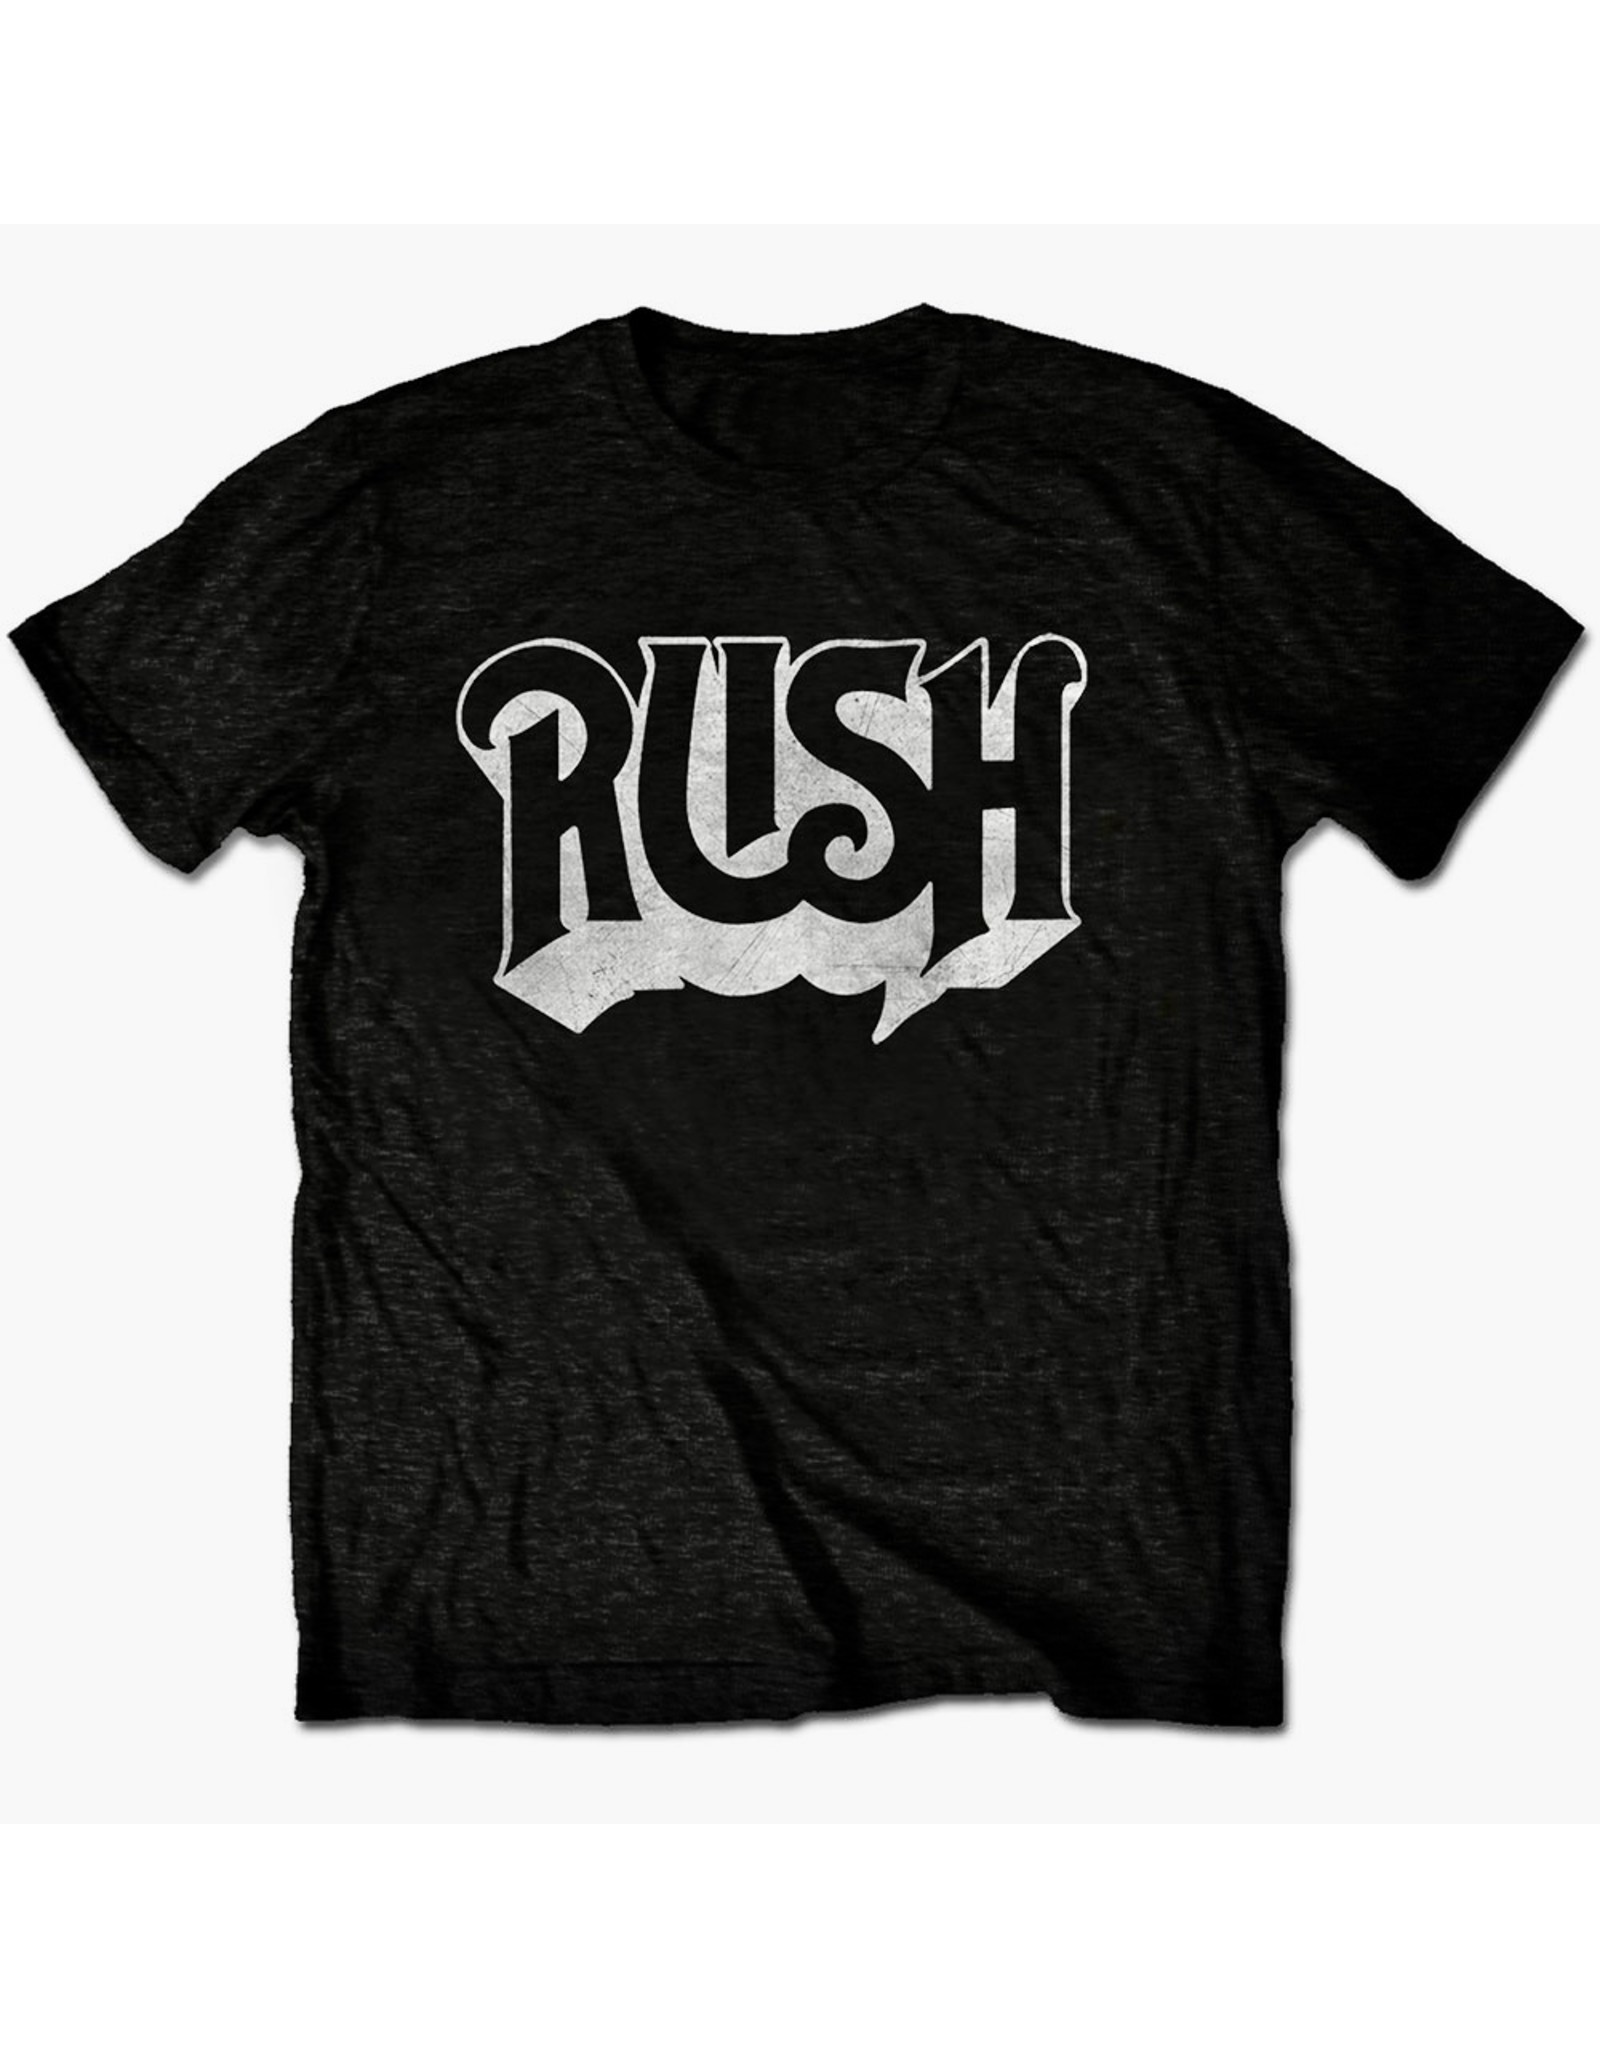 Rush / Classic Logo Tee